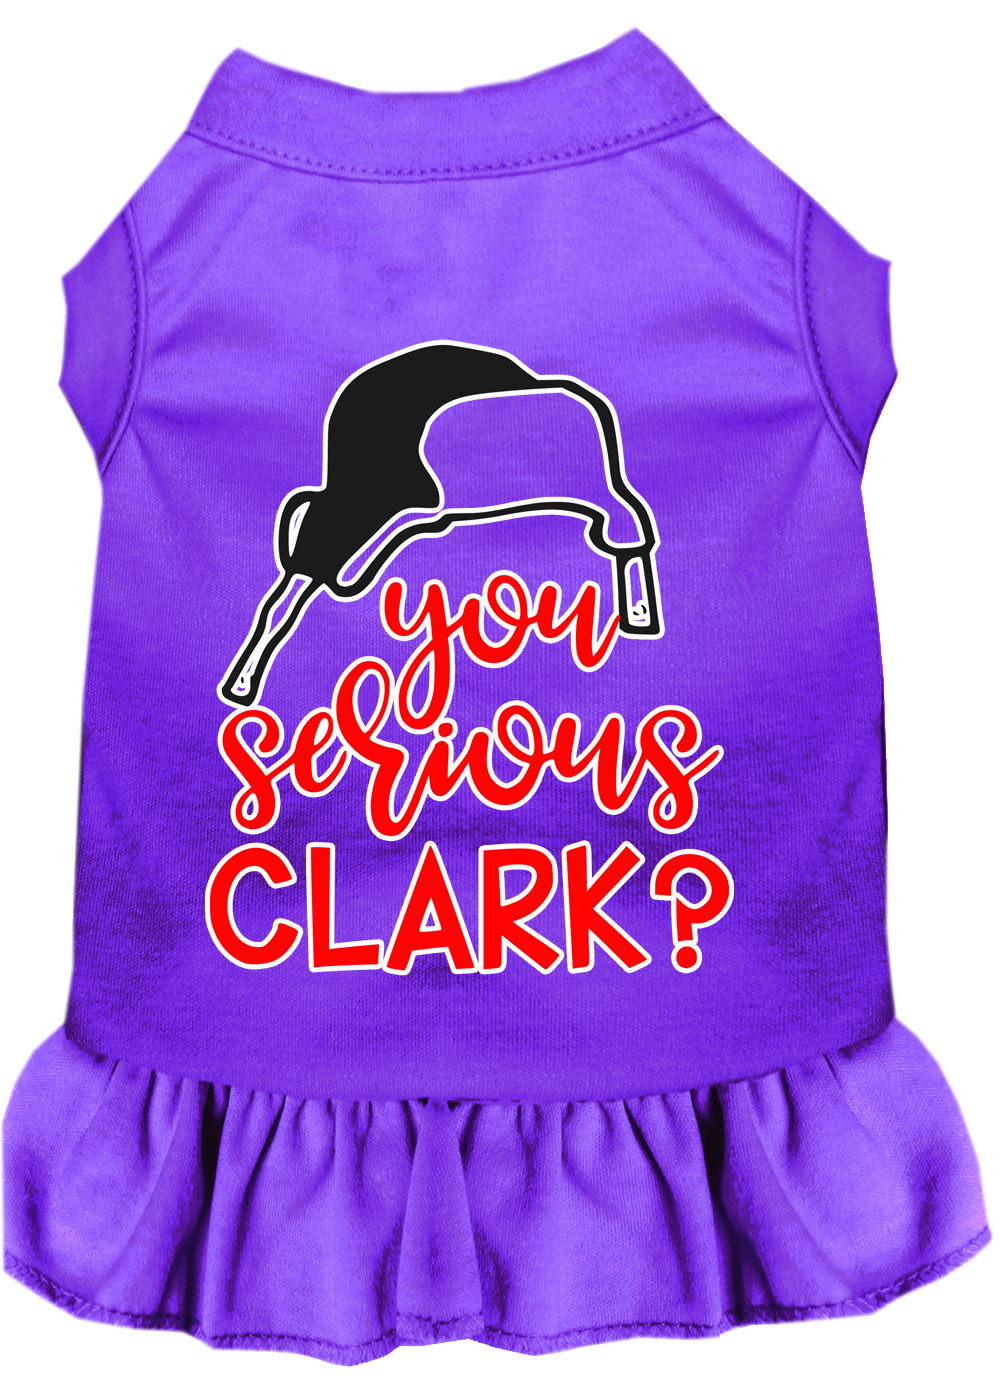 You Serious Clark? Screen Print Dog Dress Purple XXXL